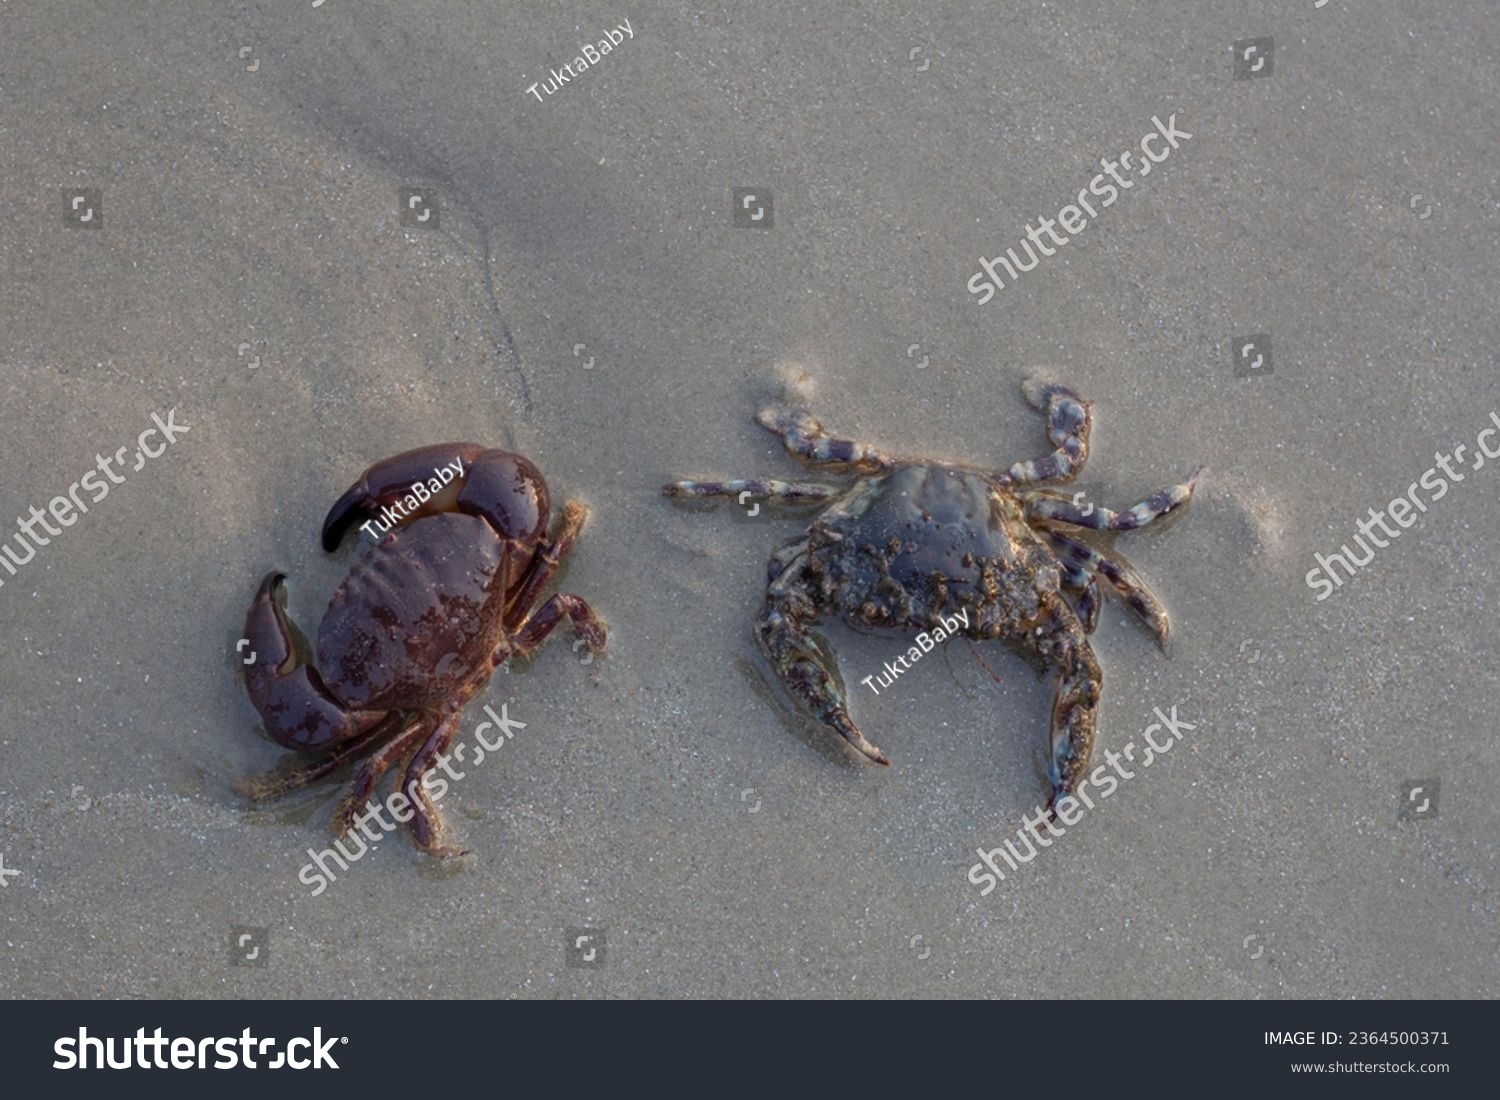 Top view of Blue swimming crab, horse crab, genus maja, Scylla serrata or Serrated Mud Crab on the sand beach. #2364500371